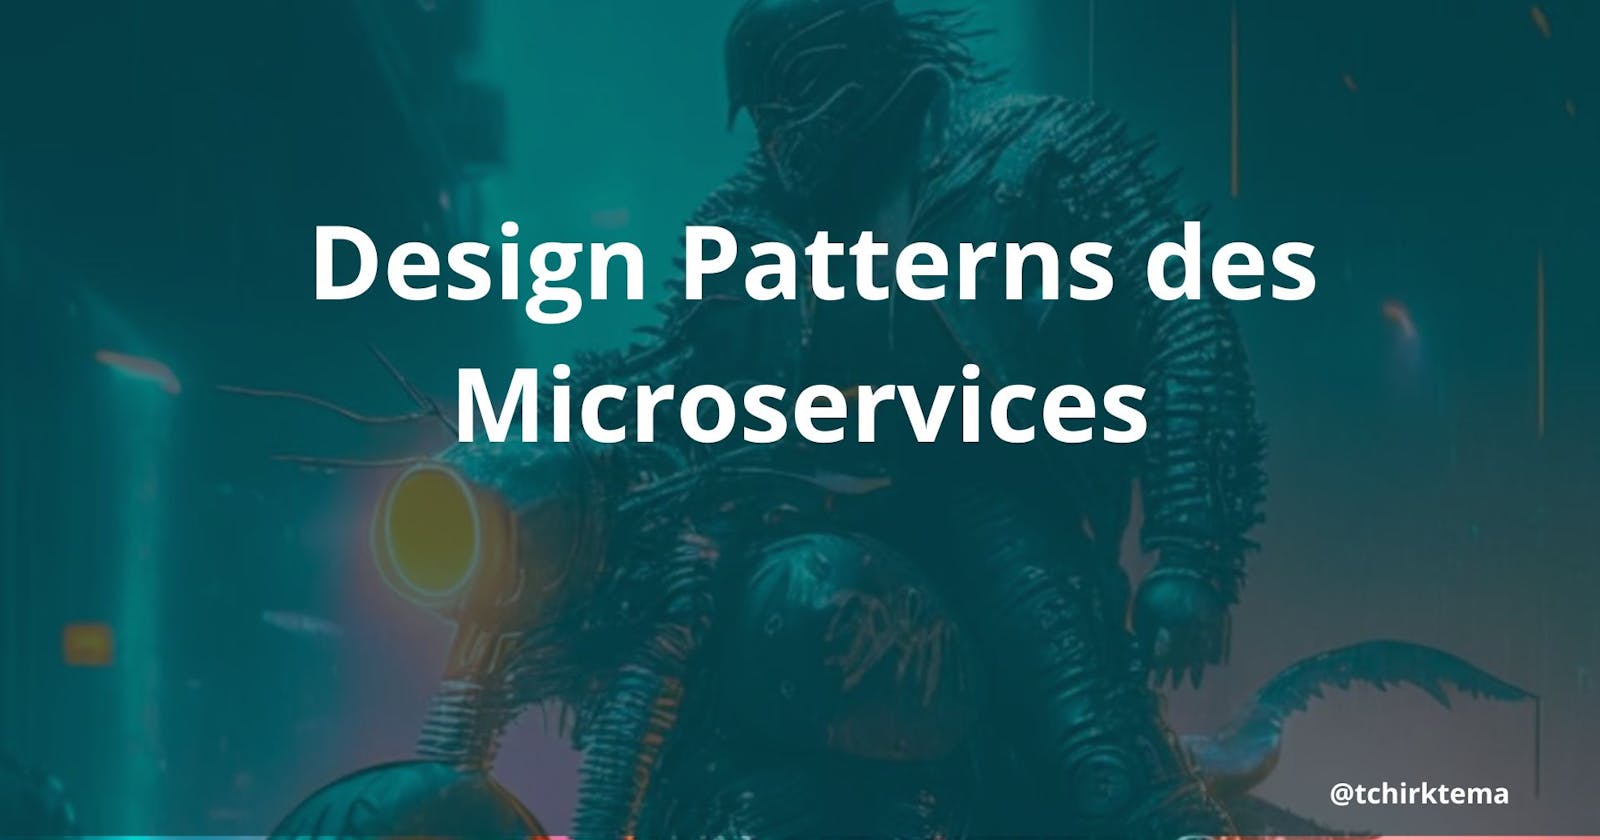 Design Patterns des Microservices